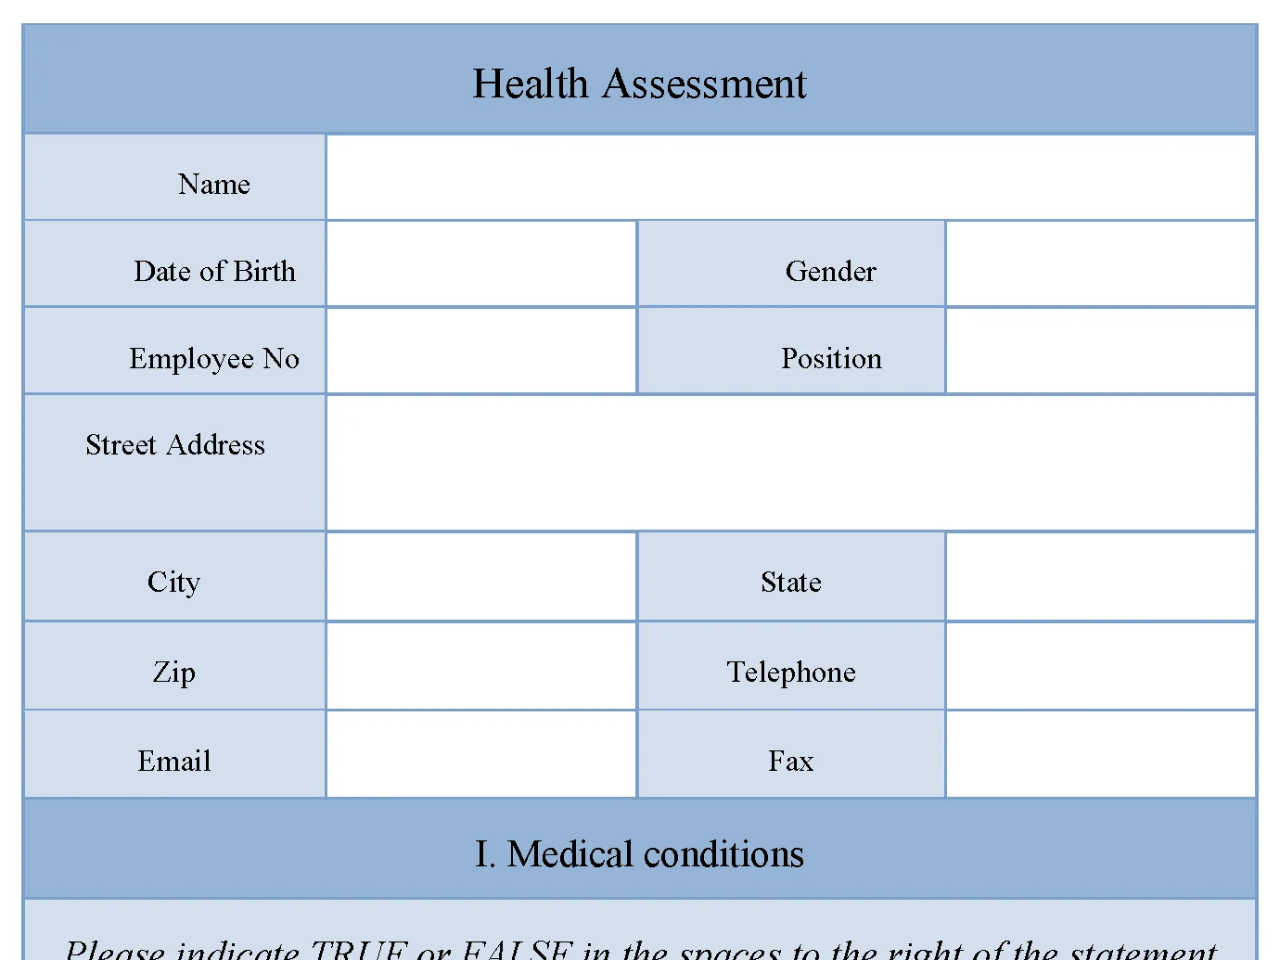 Health Assessment Form